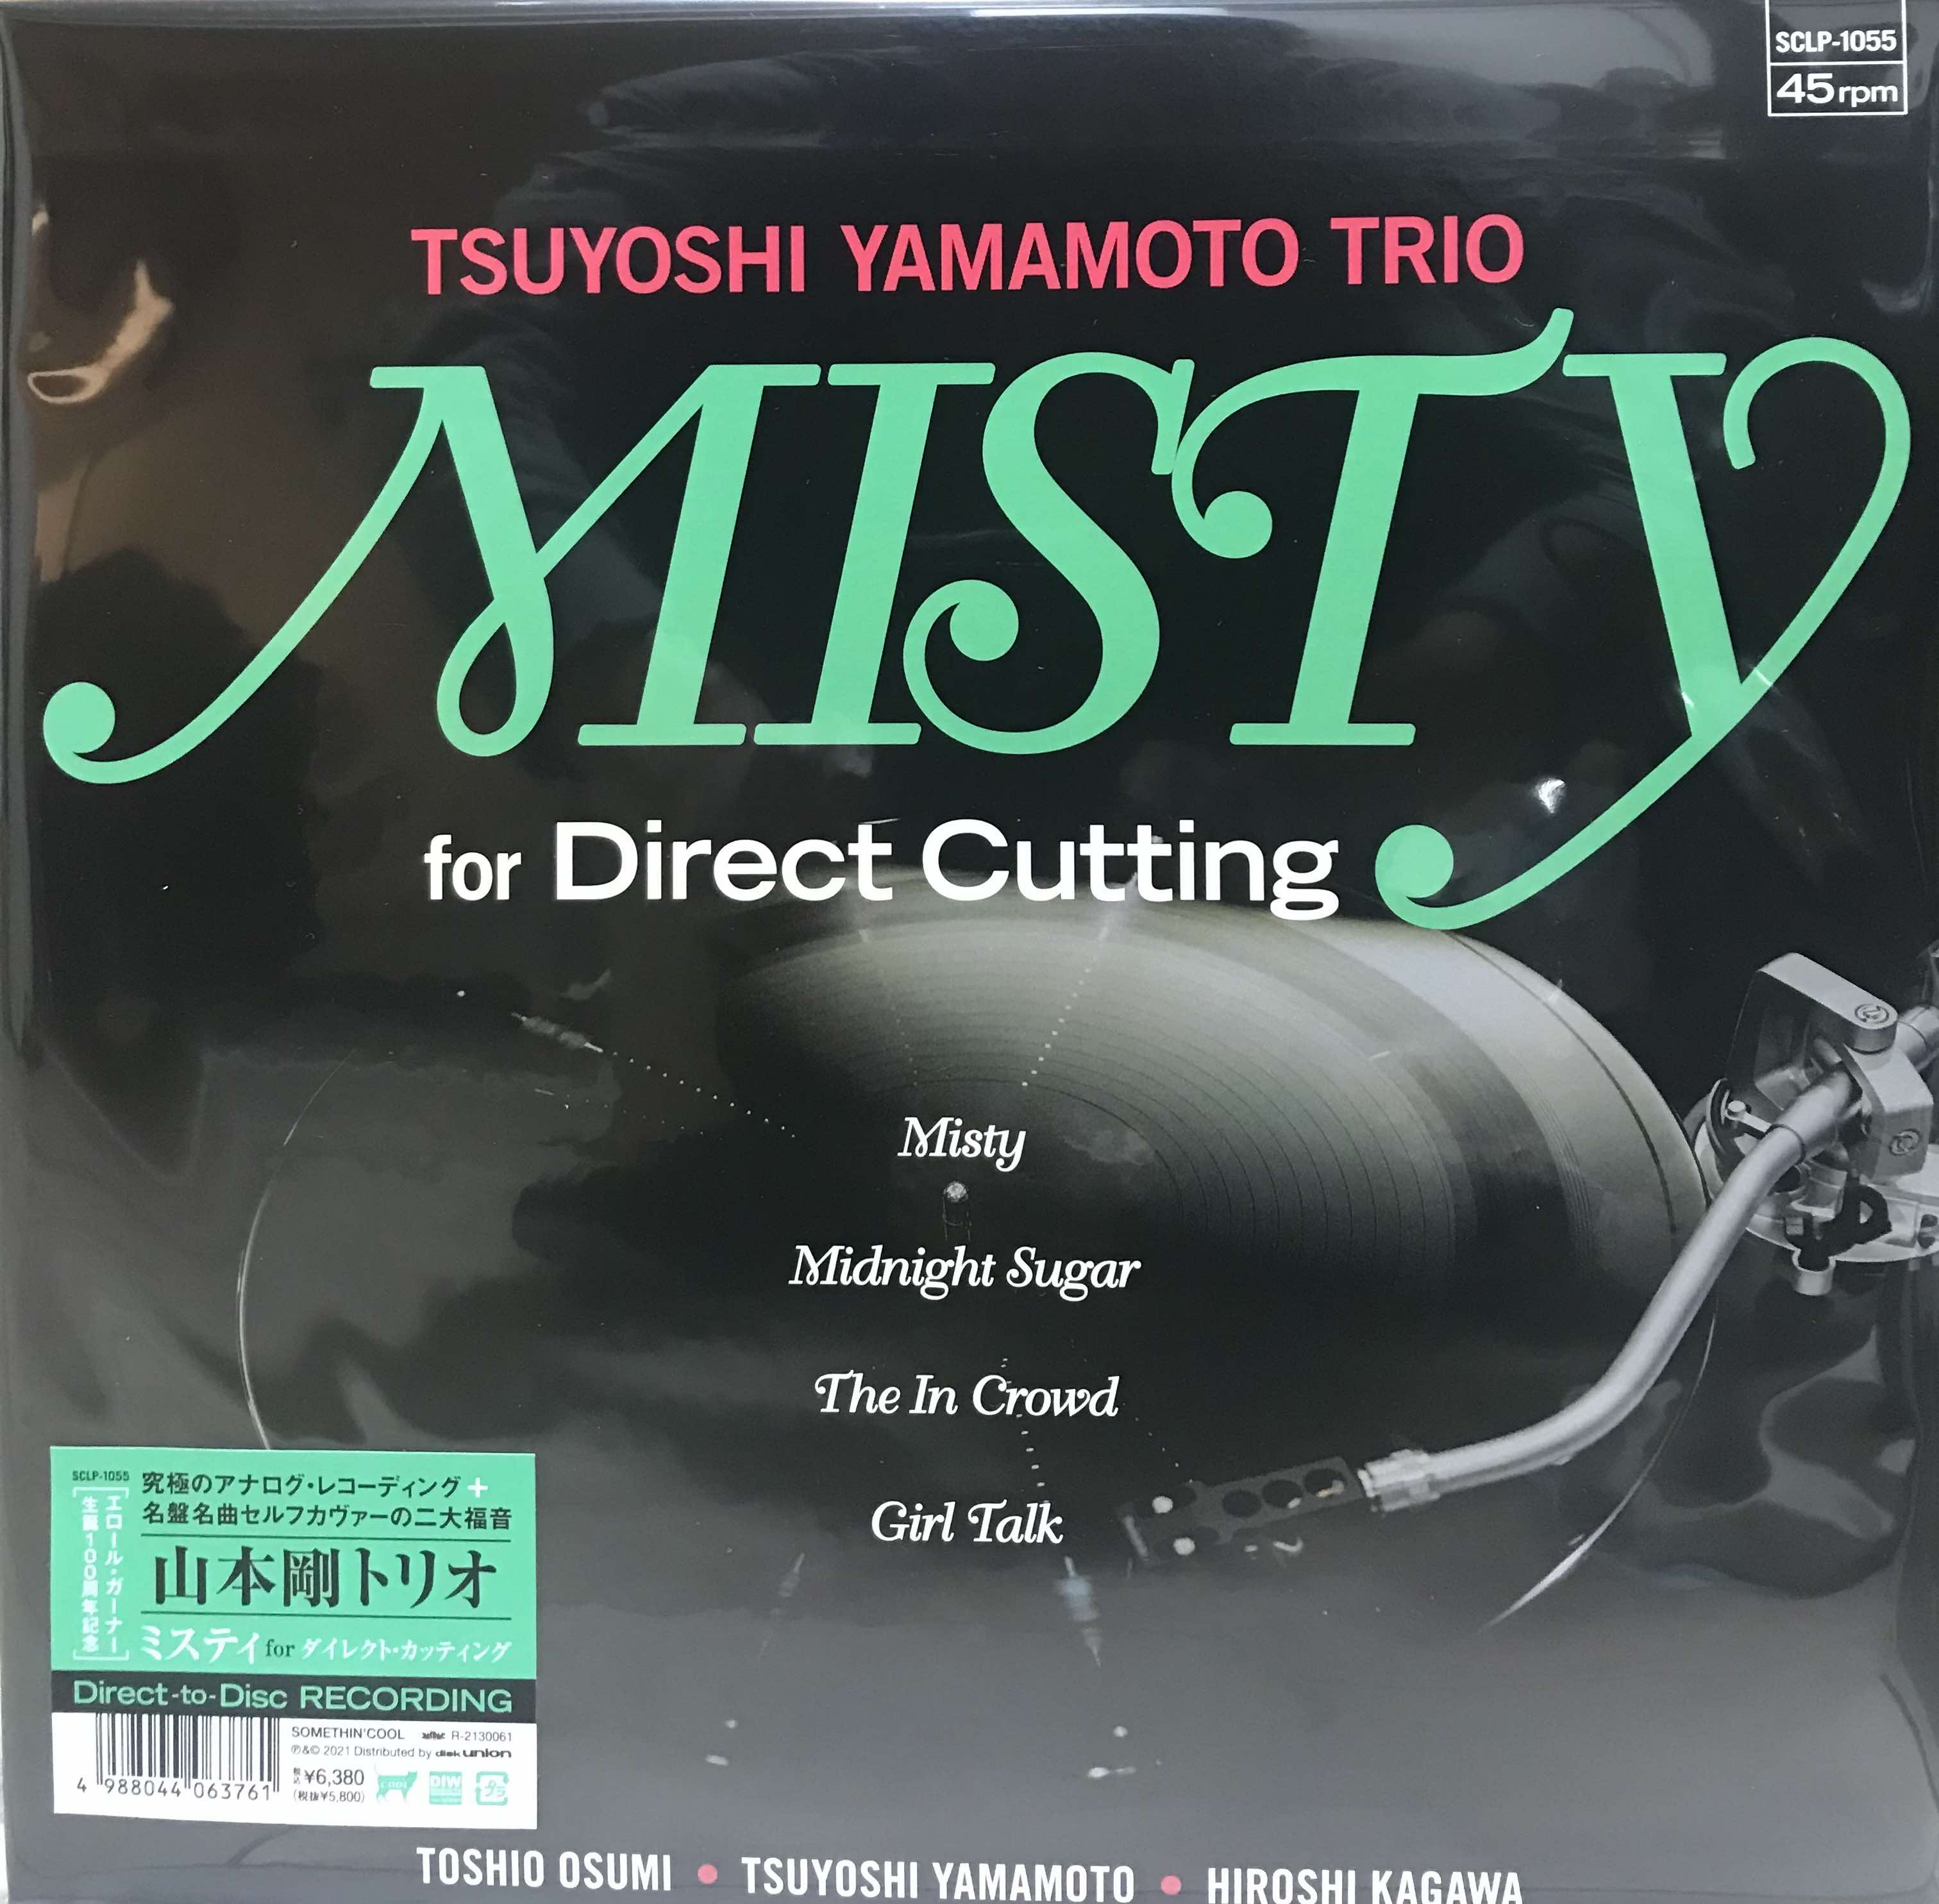 Tsuyoshi Yamamoto Trio – Misty For Direct Cutting